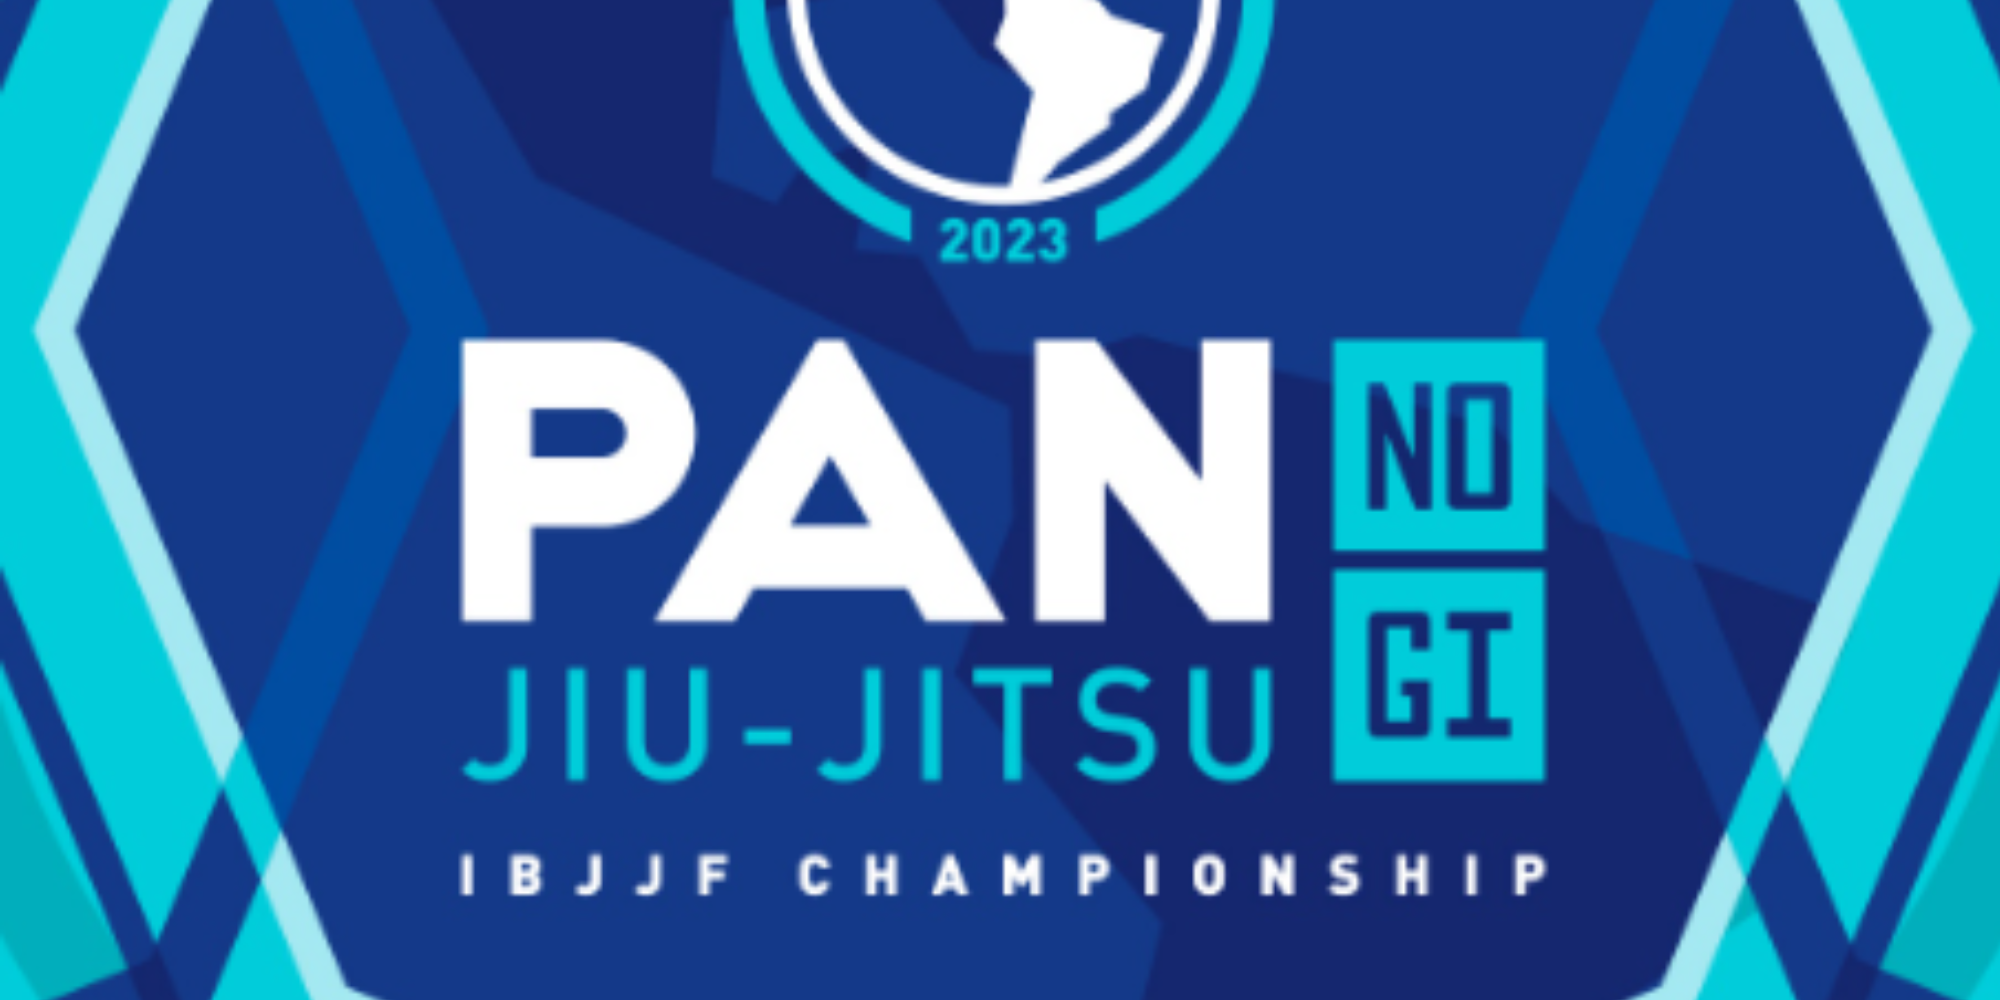 IBJJF No Gi Pan Championship 2023 Full Preview